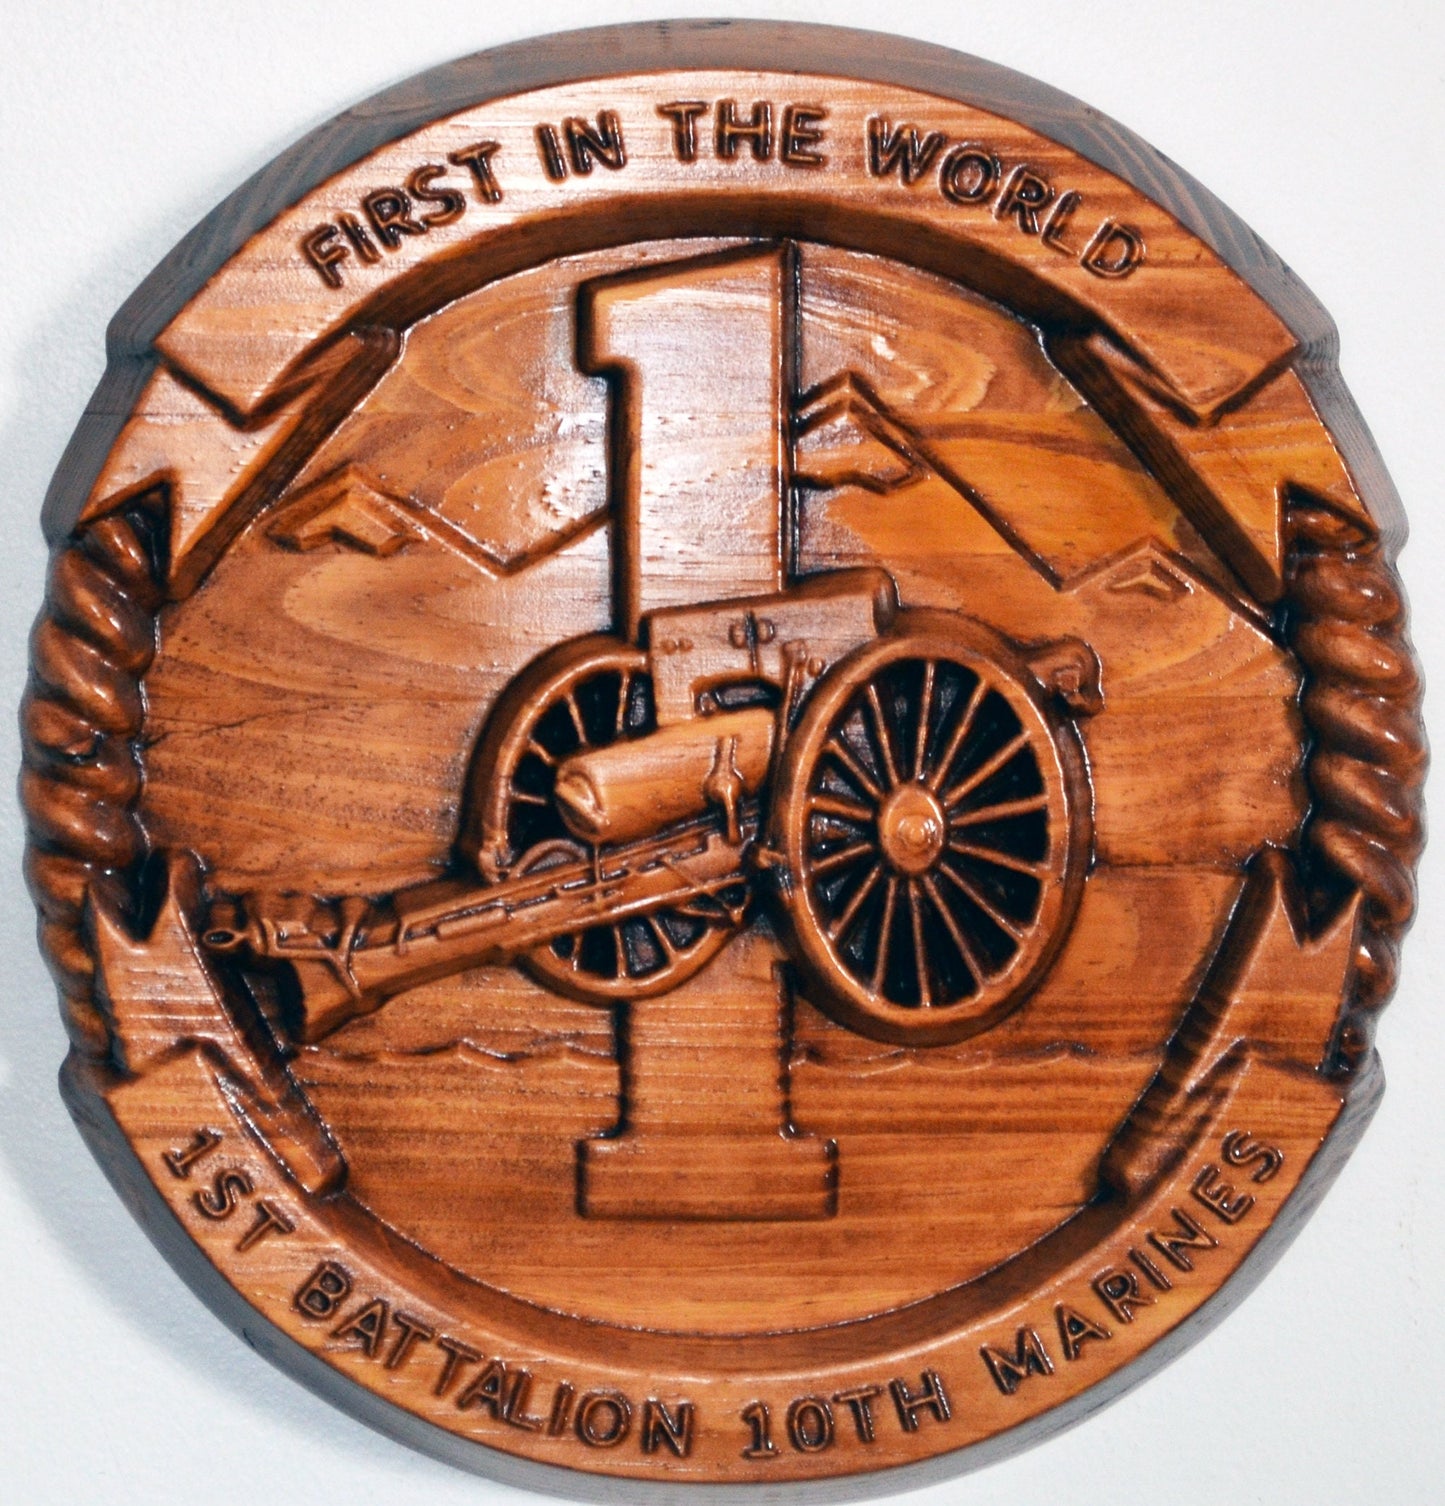 USMC 1st Battalion 10th Marines, US Marine Corps wood plaque, military plaque